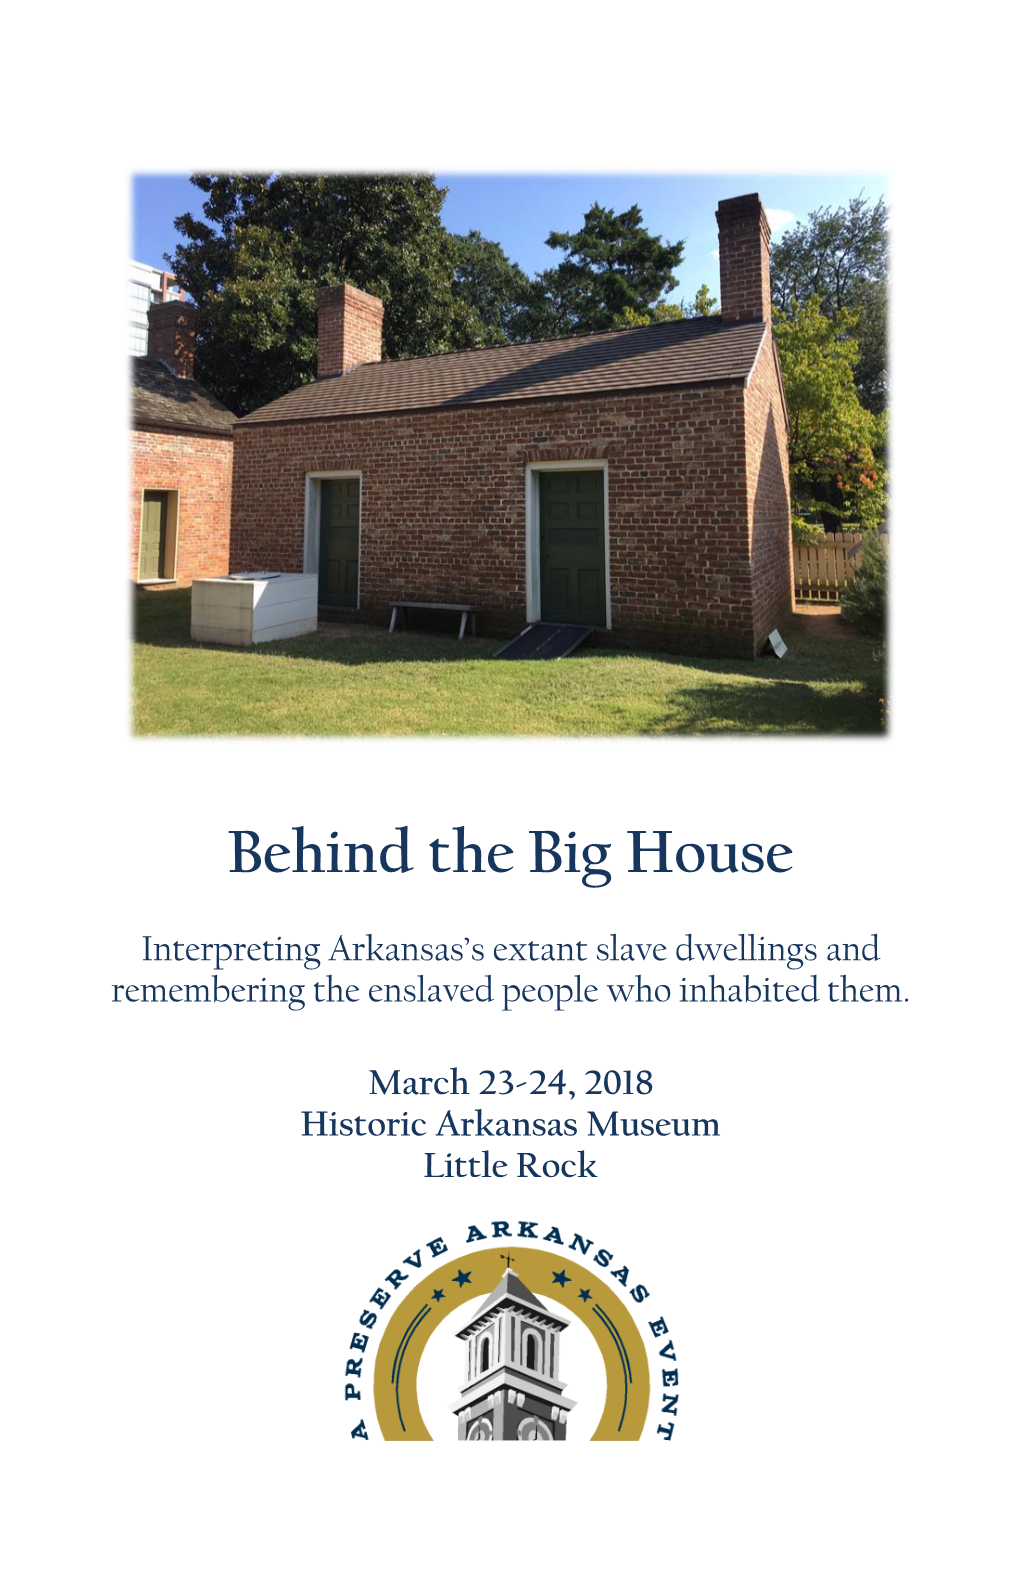 Behind the Big House Program